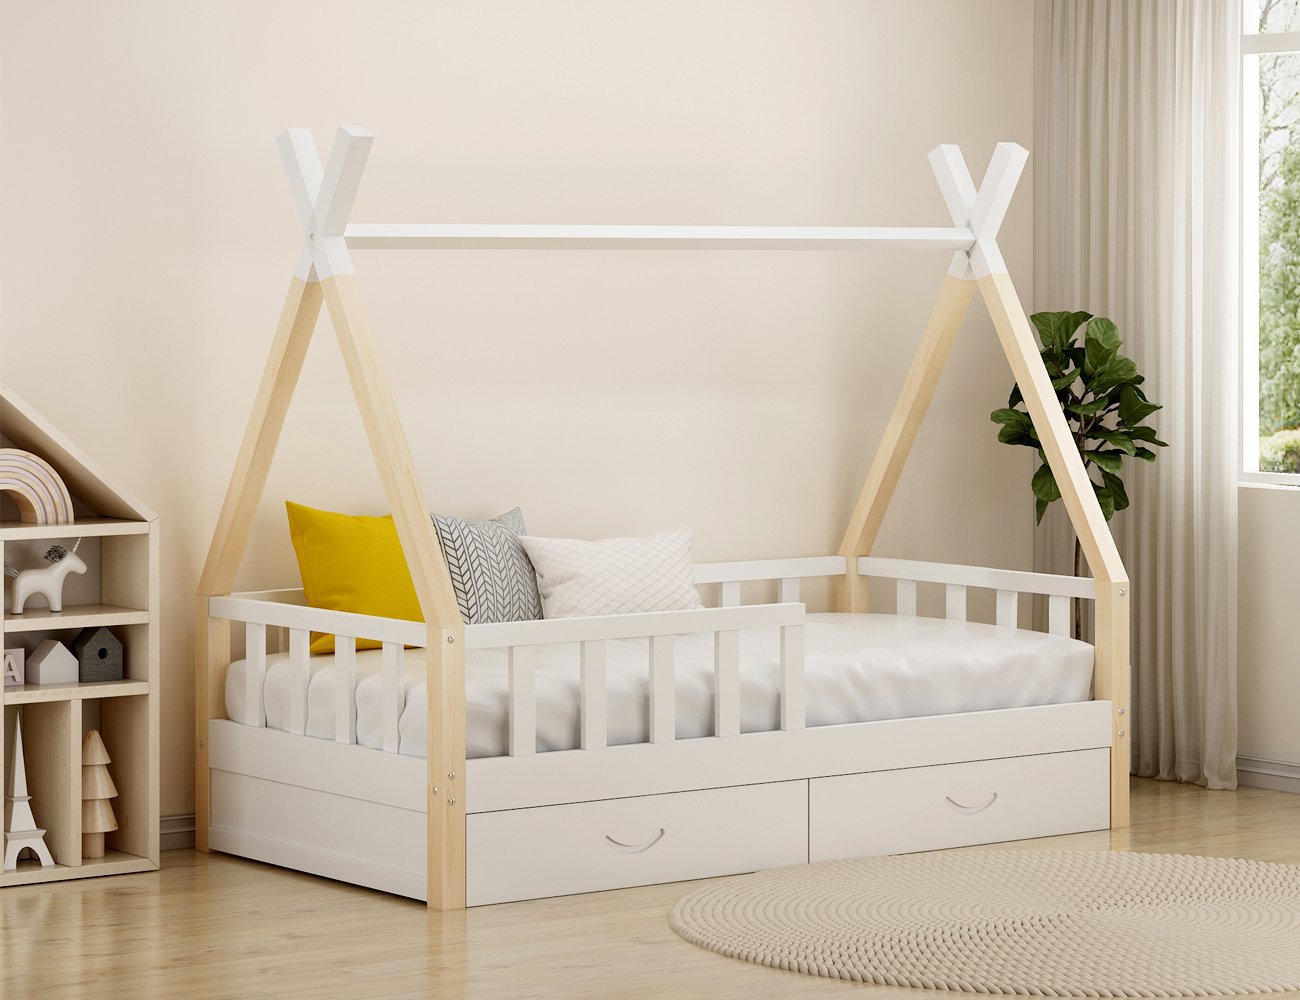 Sora Kids Single Bed Frame @ Crazy Sales - We have the best daily deals